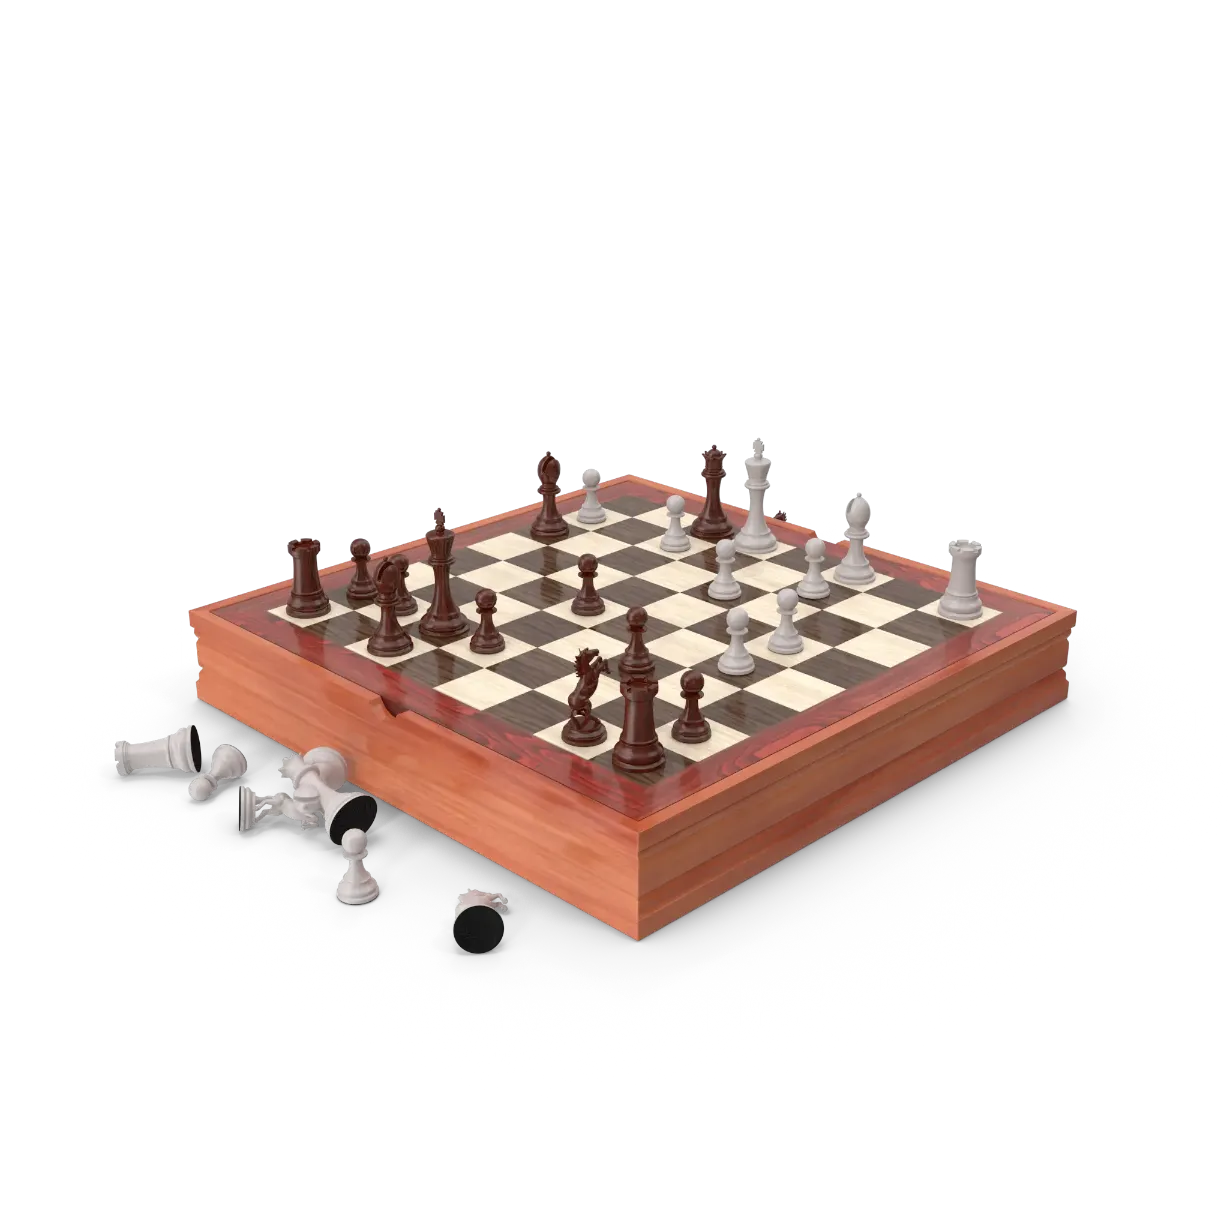 A chessboard as the Innovator's Dilemma quickcard header image